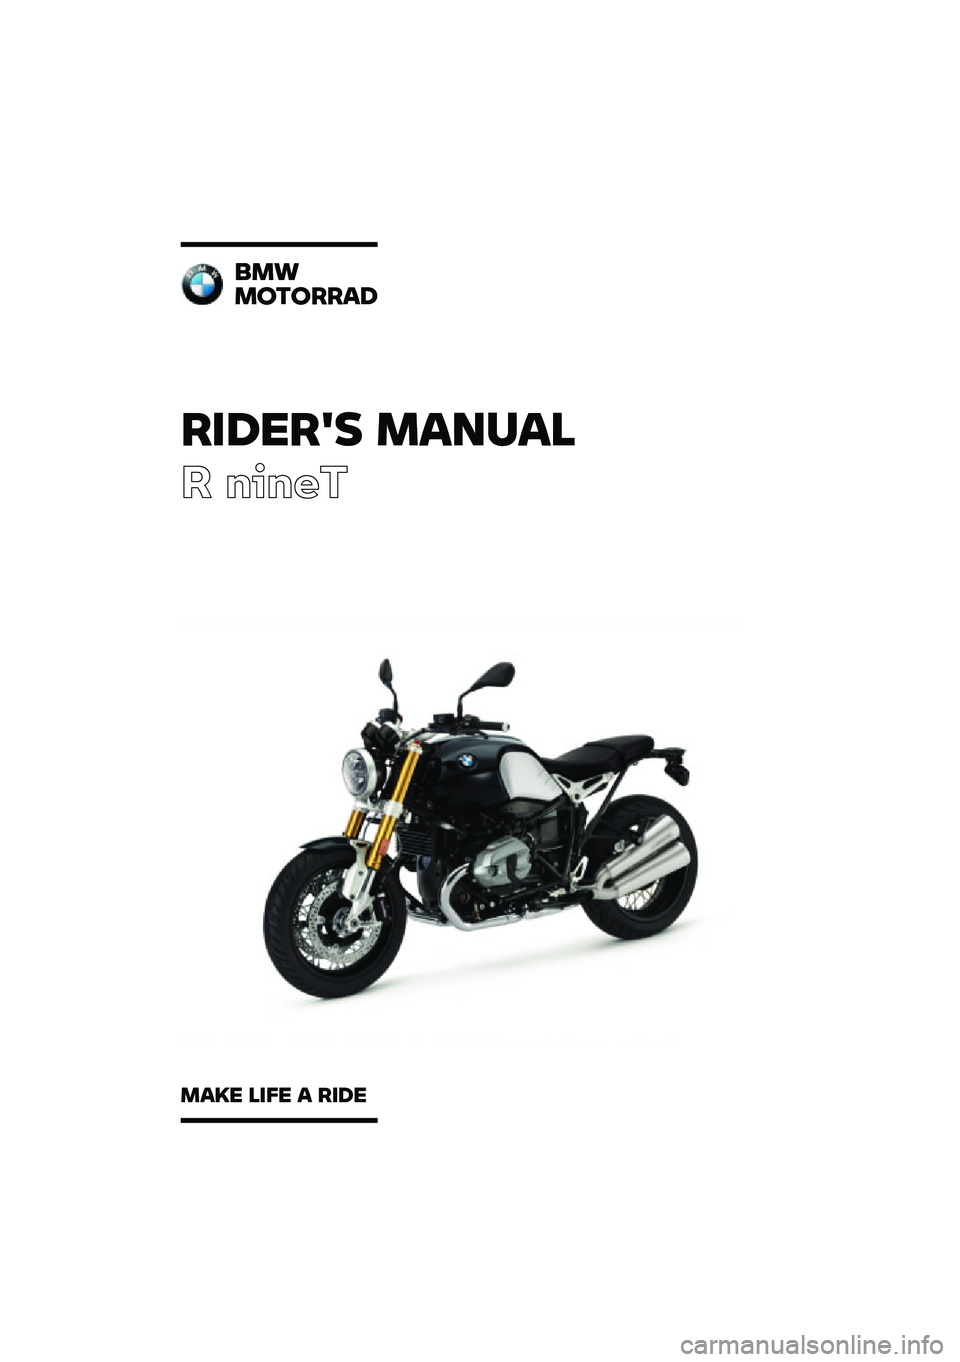 BMW MOTORRAD R NINE T 2020  Riders Manual (in English) ������� �\b�	�
��	�\f
� �����
�
�\b�
�\b������	�
�\b�	�� �\f��� �	 ���� 